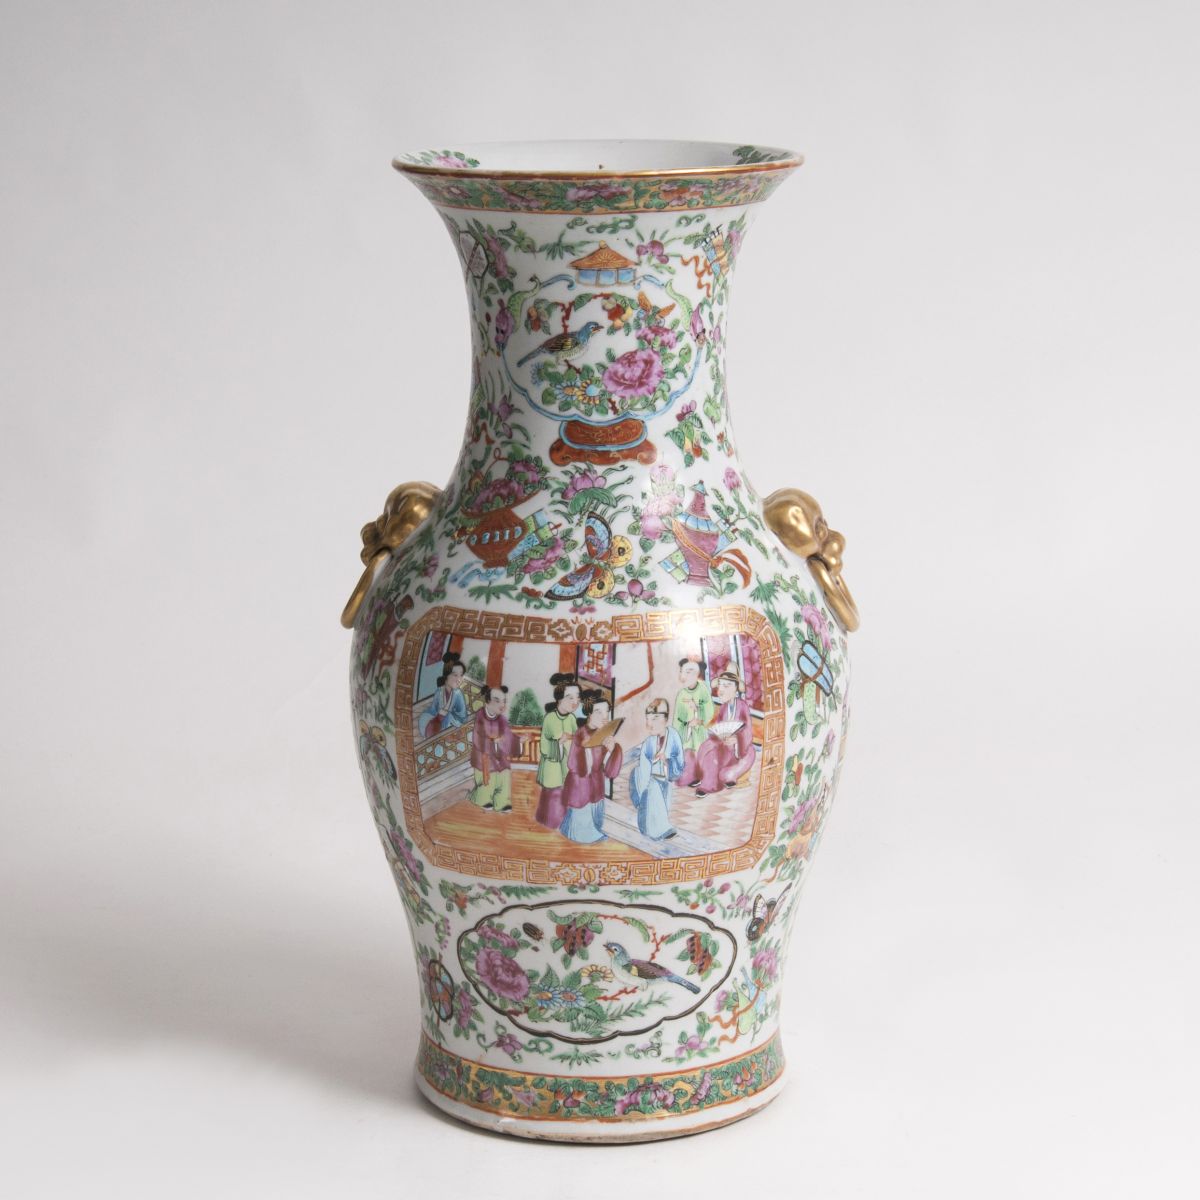 A 'Famille rose' Vase in Kanton style